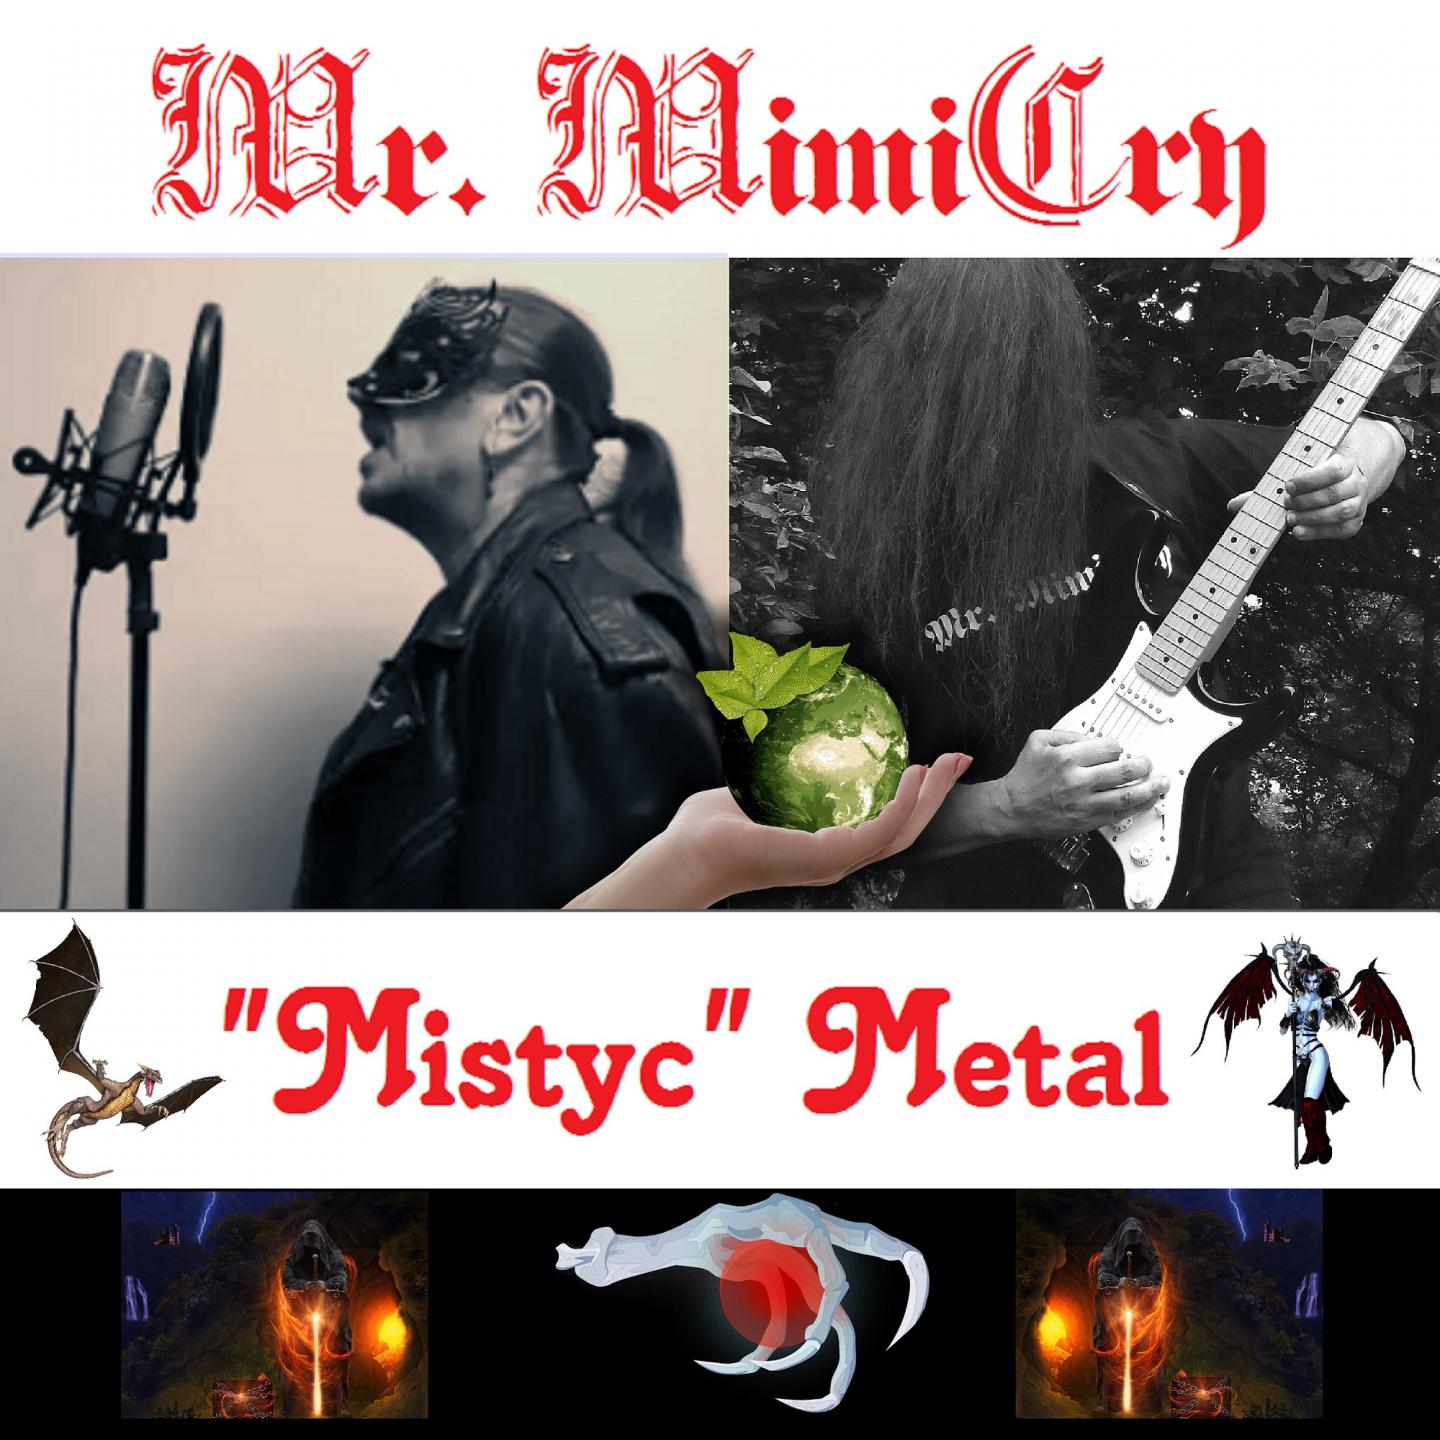 "Mistyc" Metal